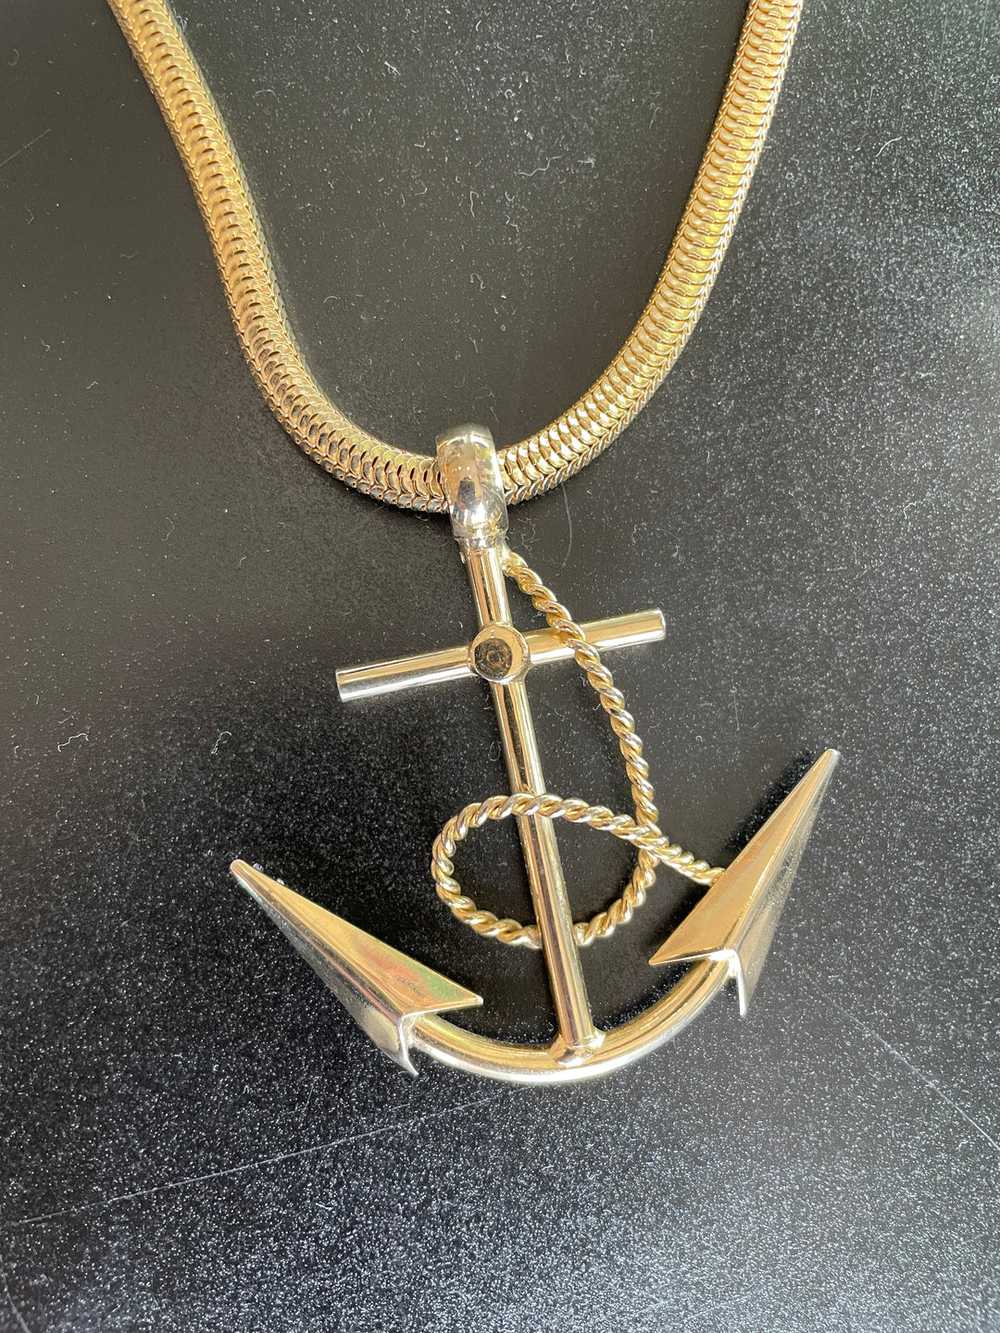 Vintage Anchor Necklace - image 3